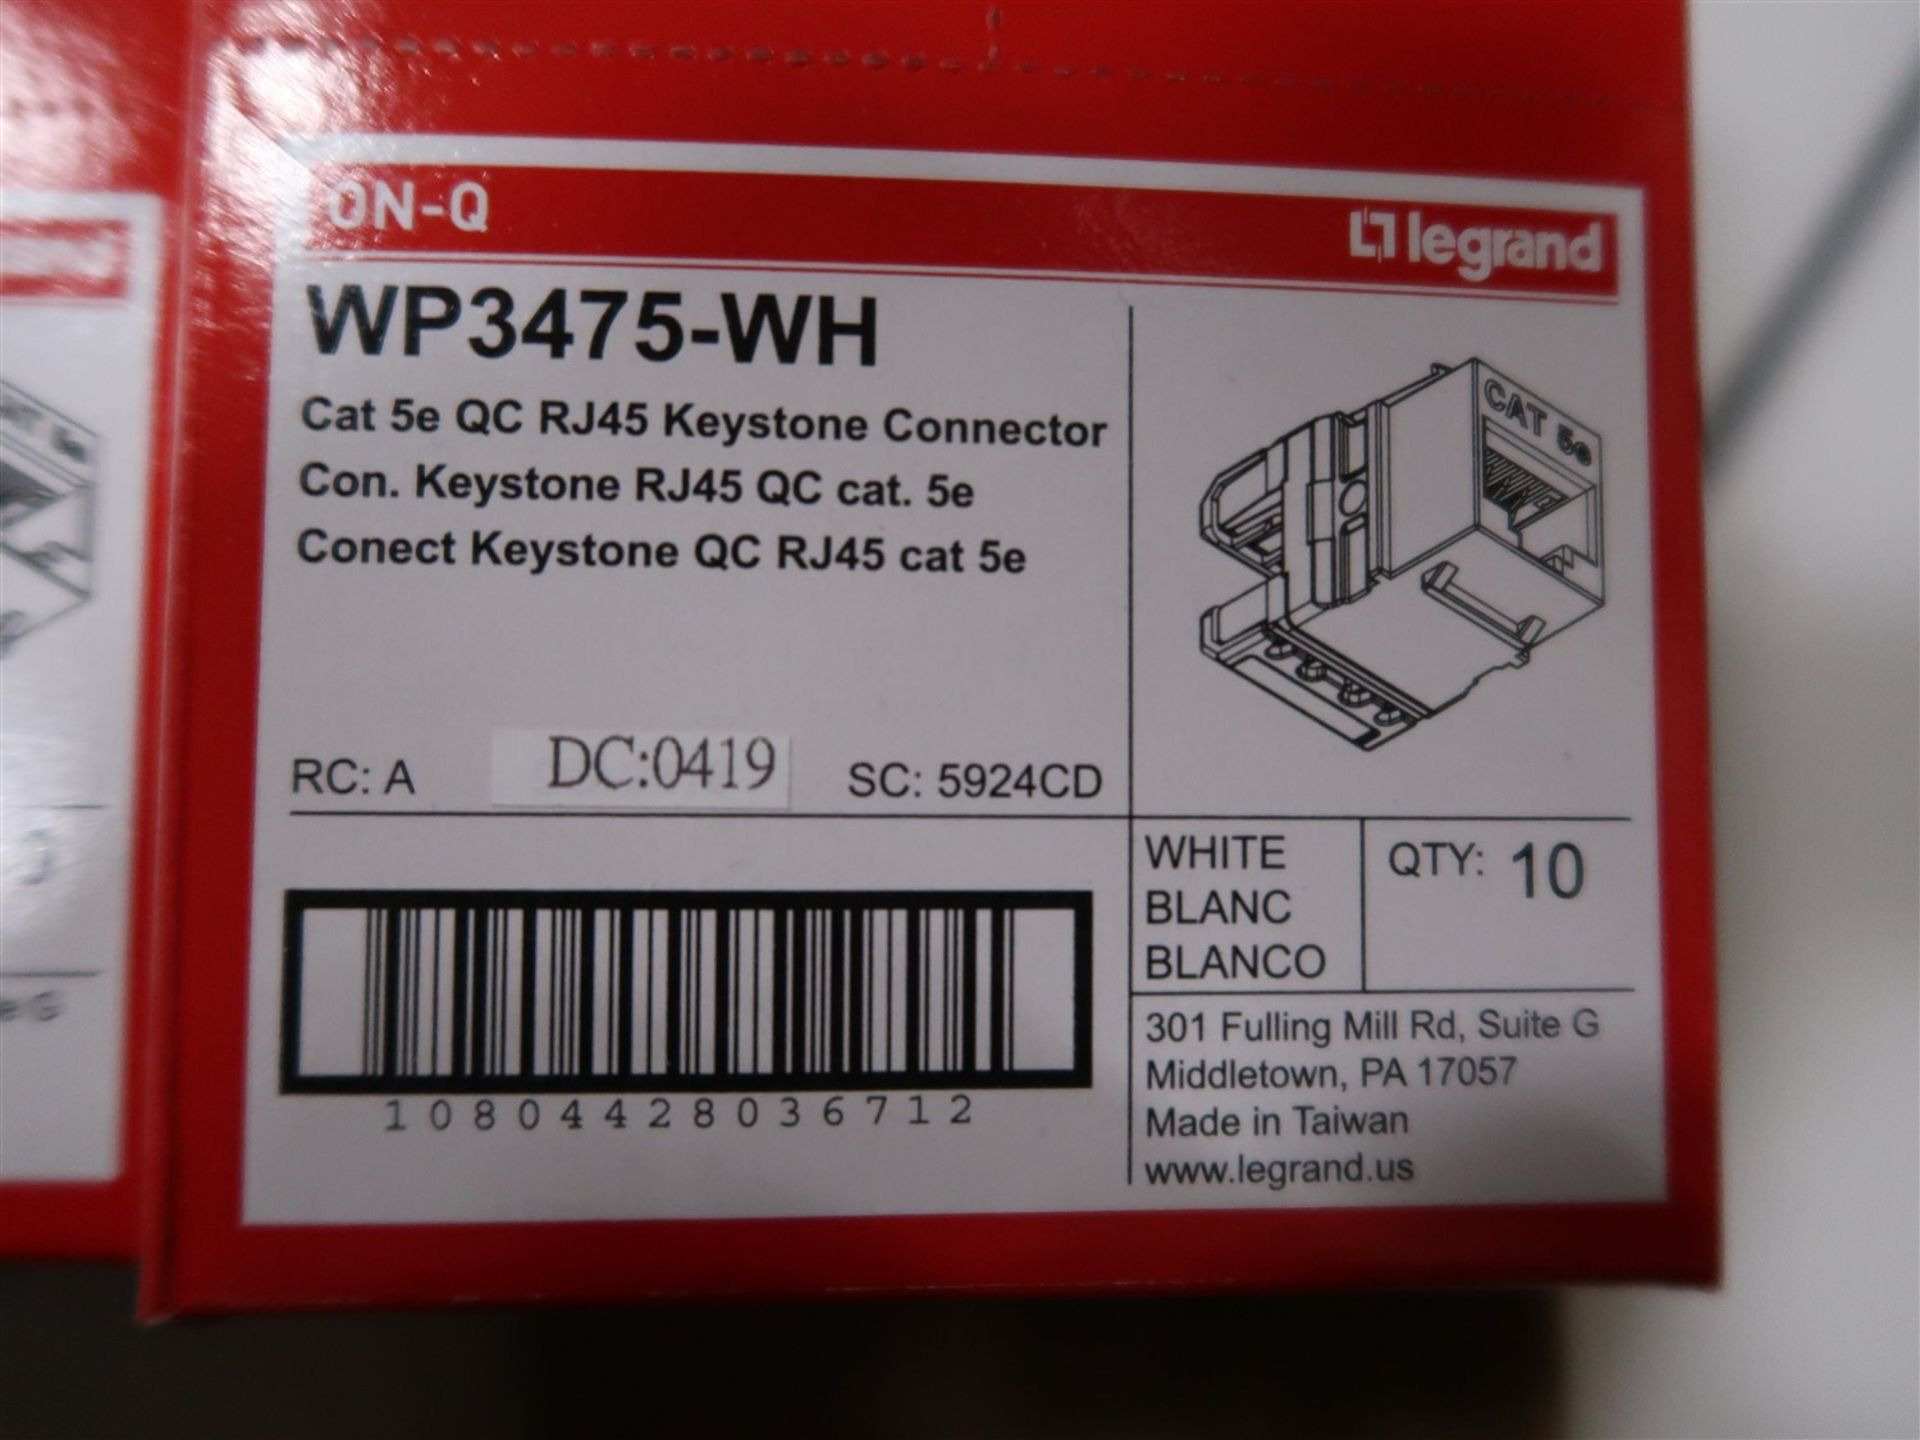 BOXES OF LEGRAND WP-3475-WH CATSE QCRJ45 KEYSTONE CONNECTOR 10 PER BOX - Image 2 of 2